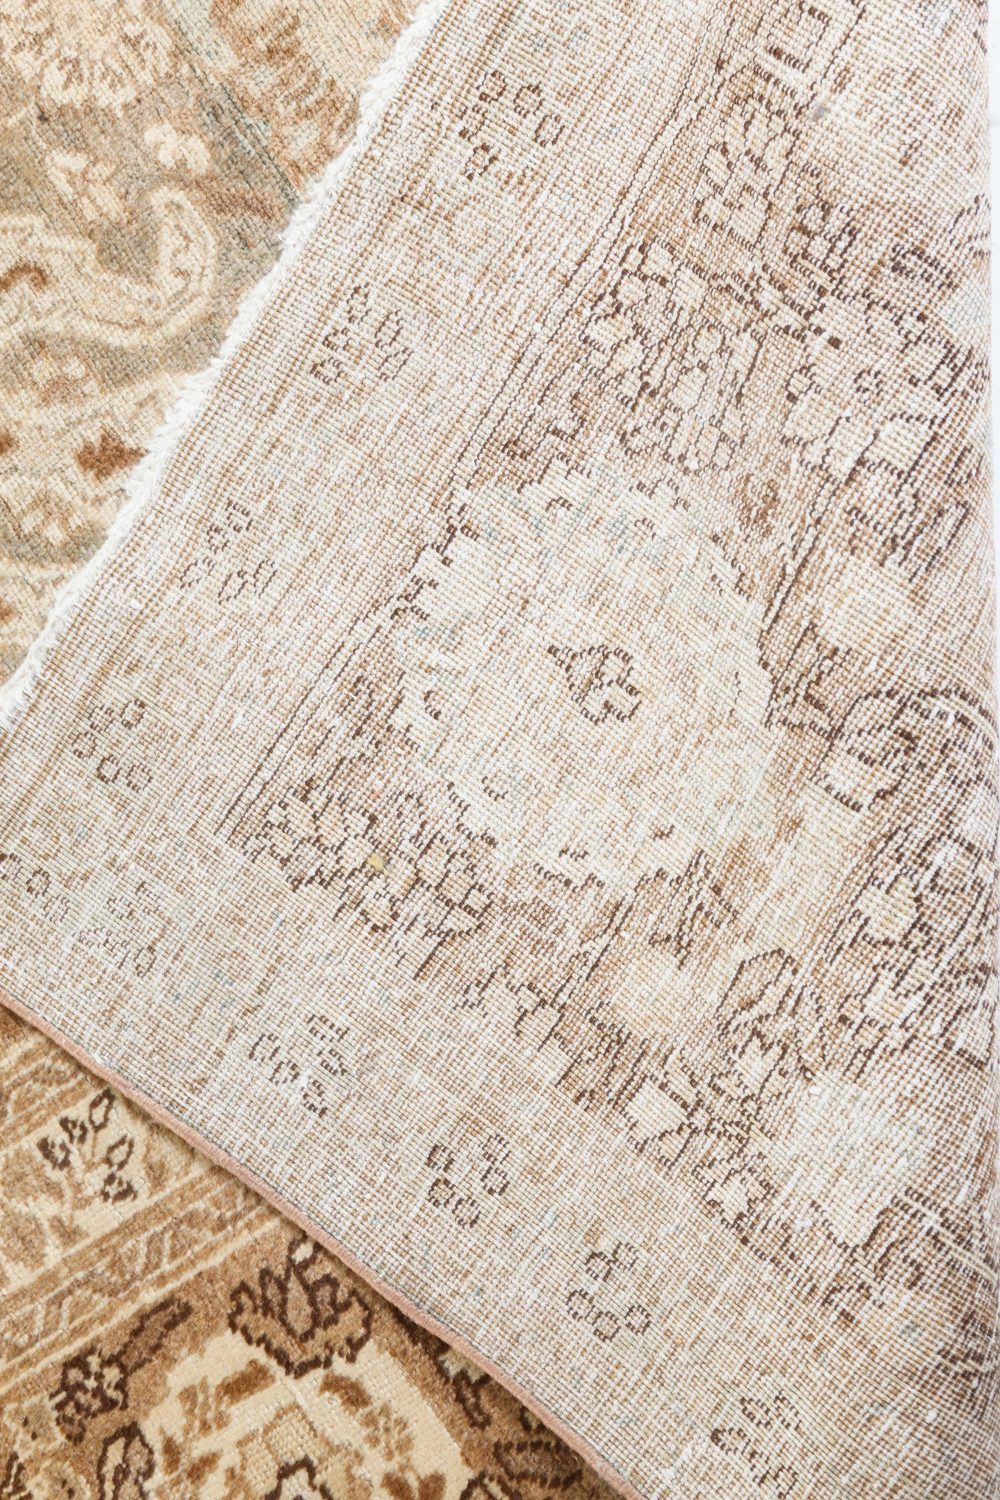 Authentic Persian Tabriz Handmade Wool Rug BB7307